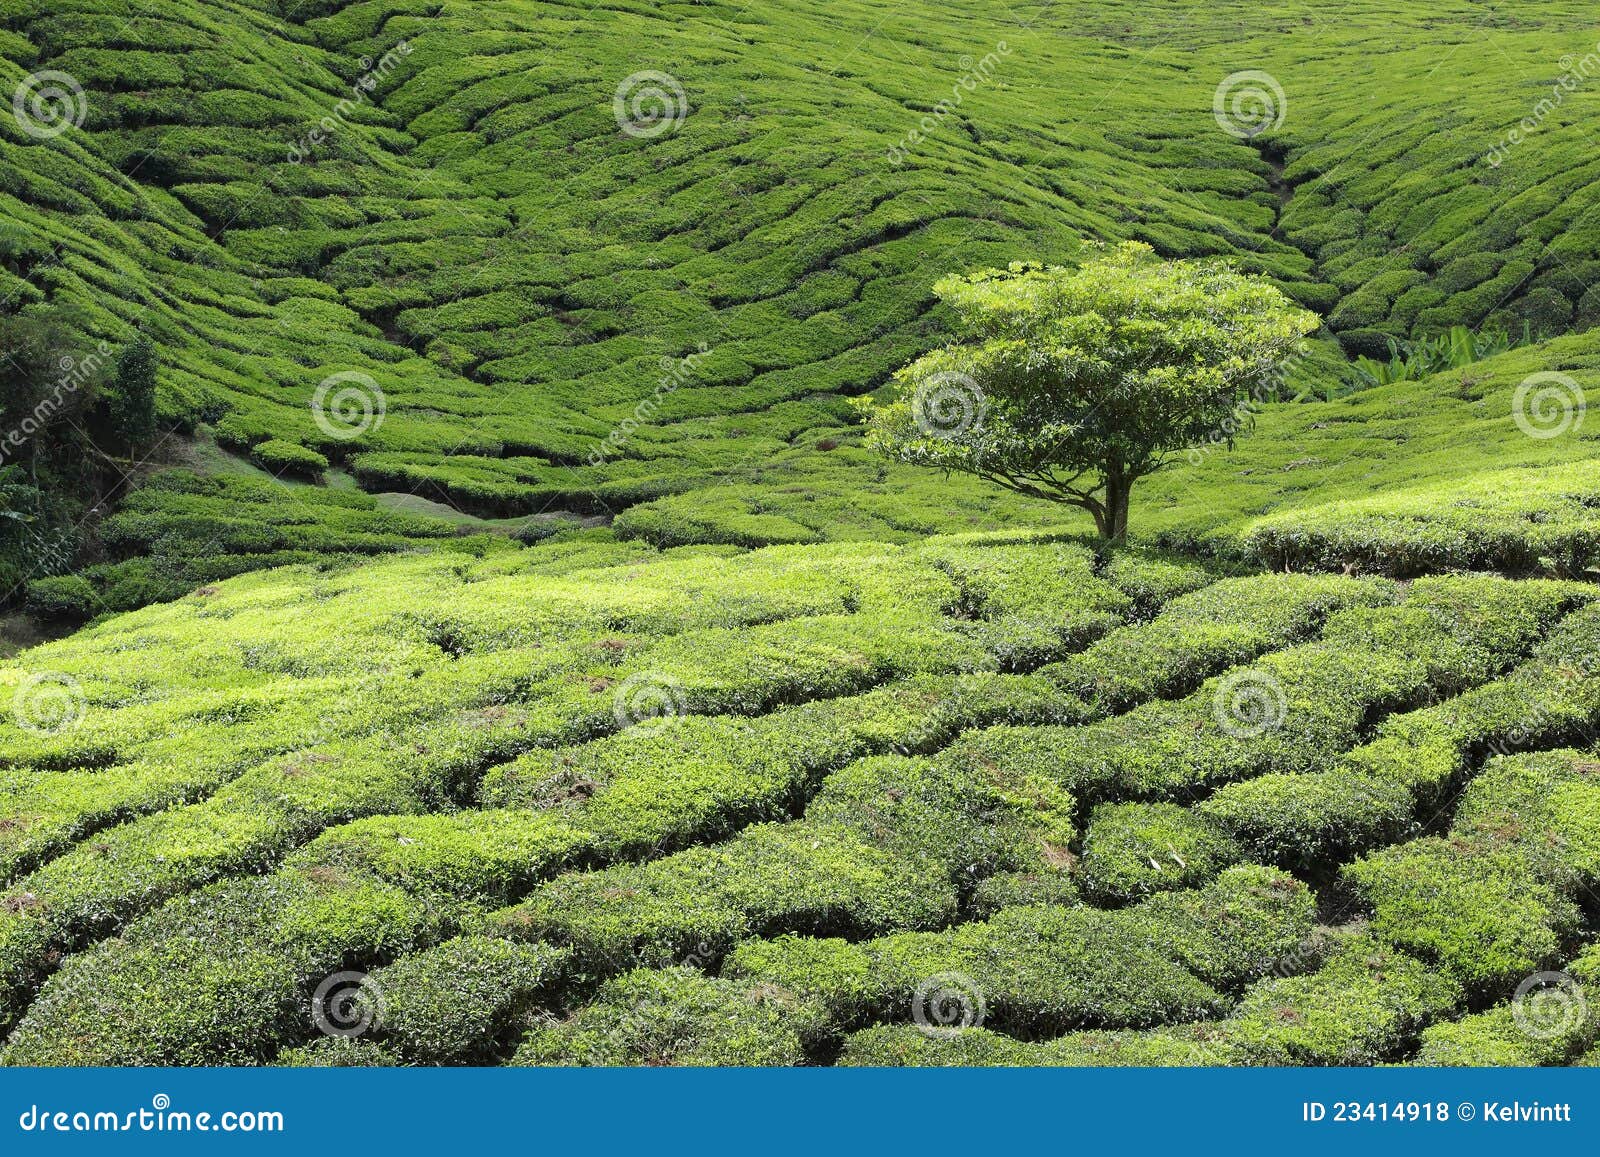 tree at tea plantation